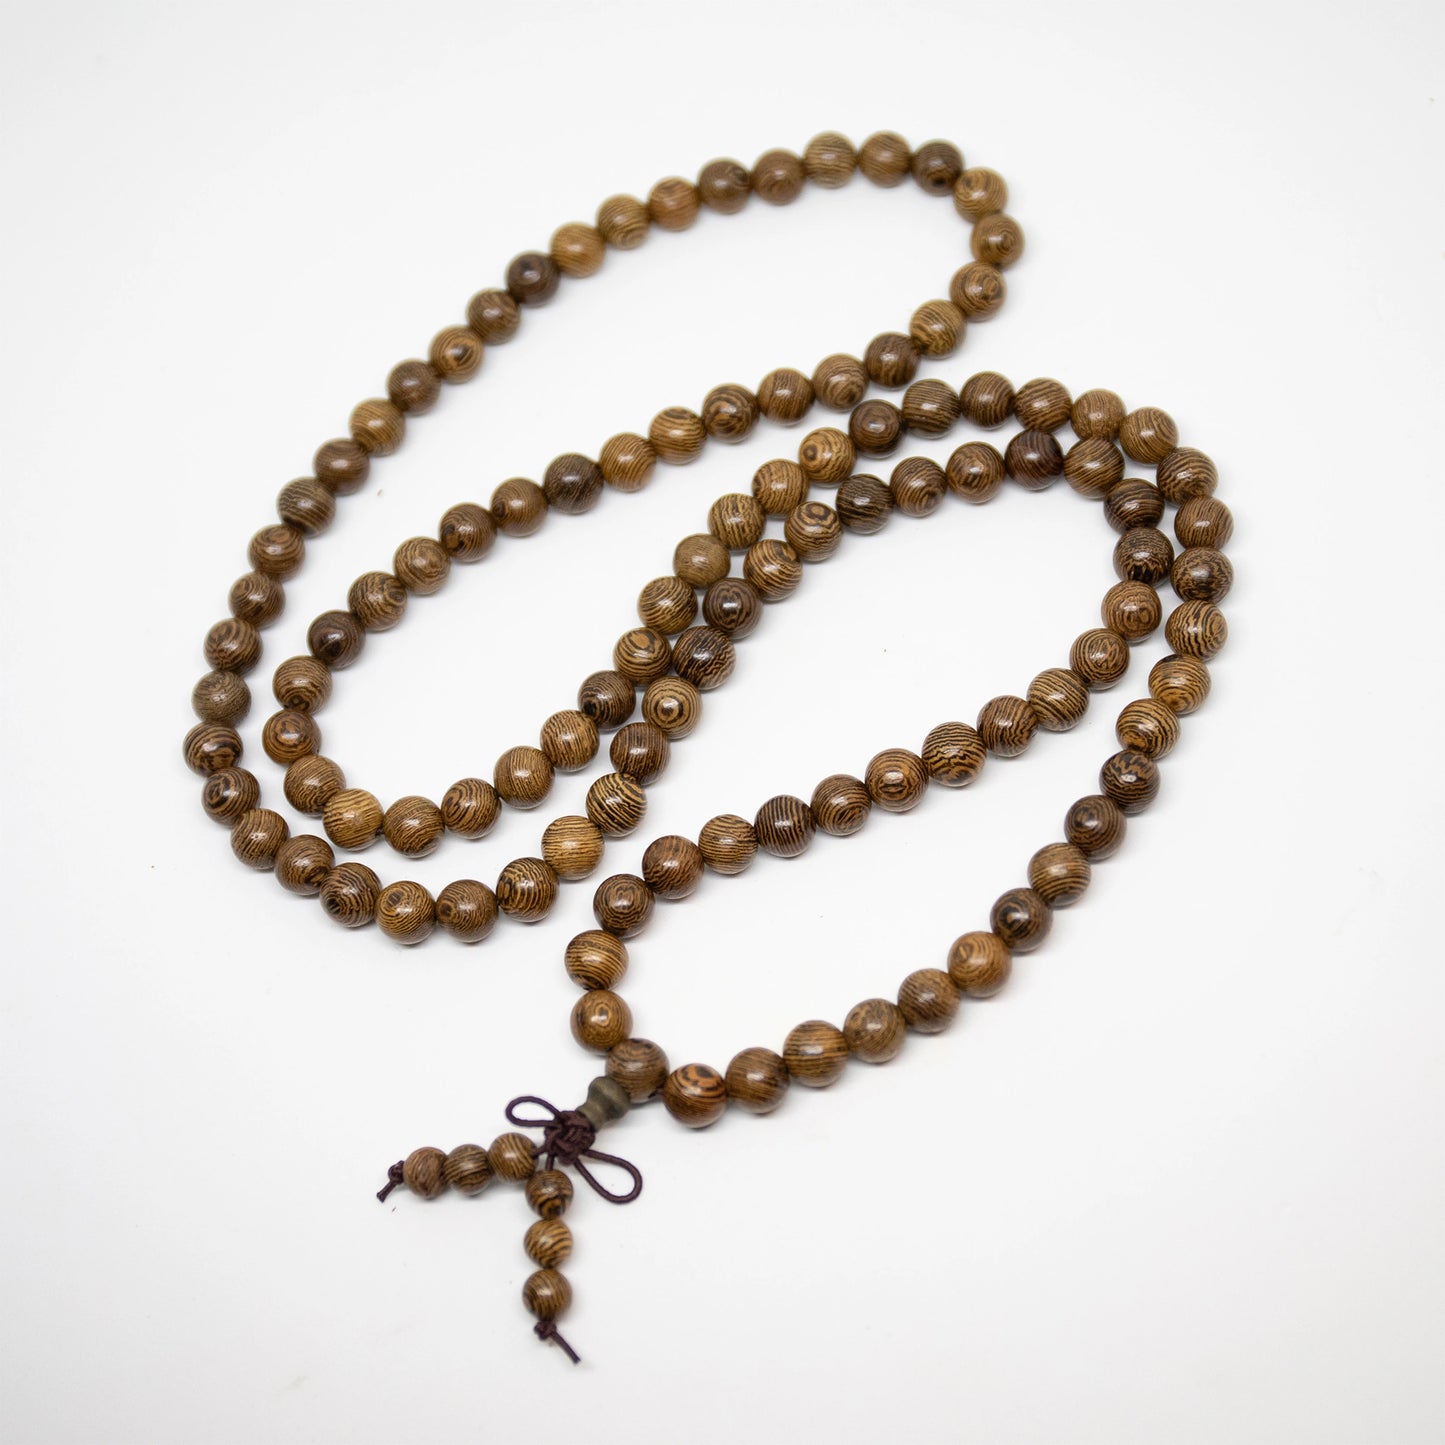 Stretchy Phoenix Tail Wood 108 Bead Mala - Prayer Beads -8mm (4 Pack)